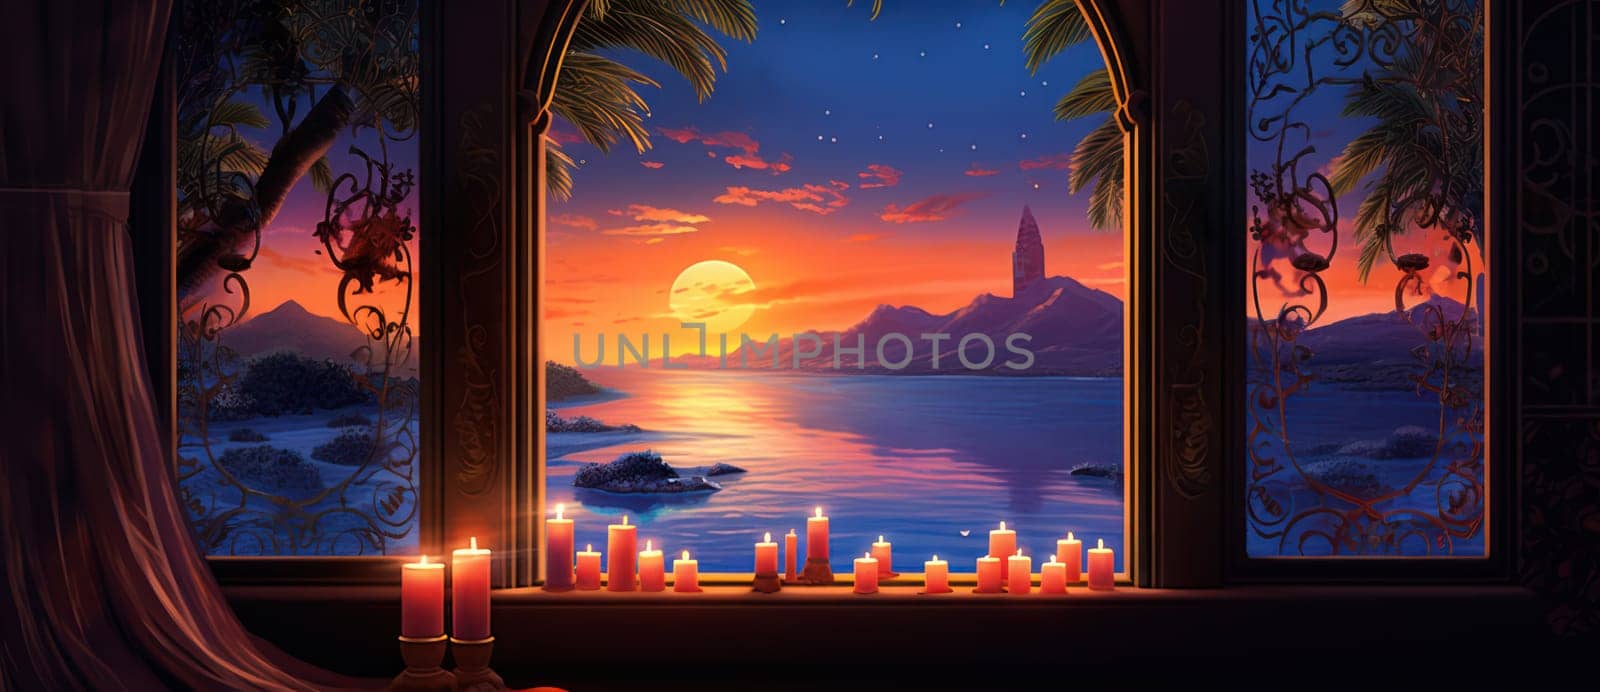 Twilight Bliss: Nightfall in Serene Seascape by Vichizh